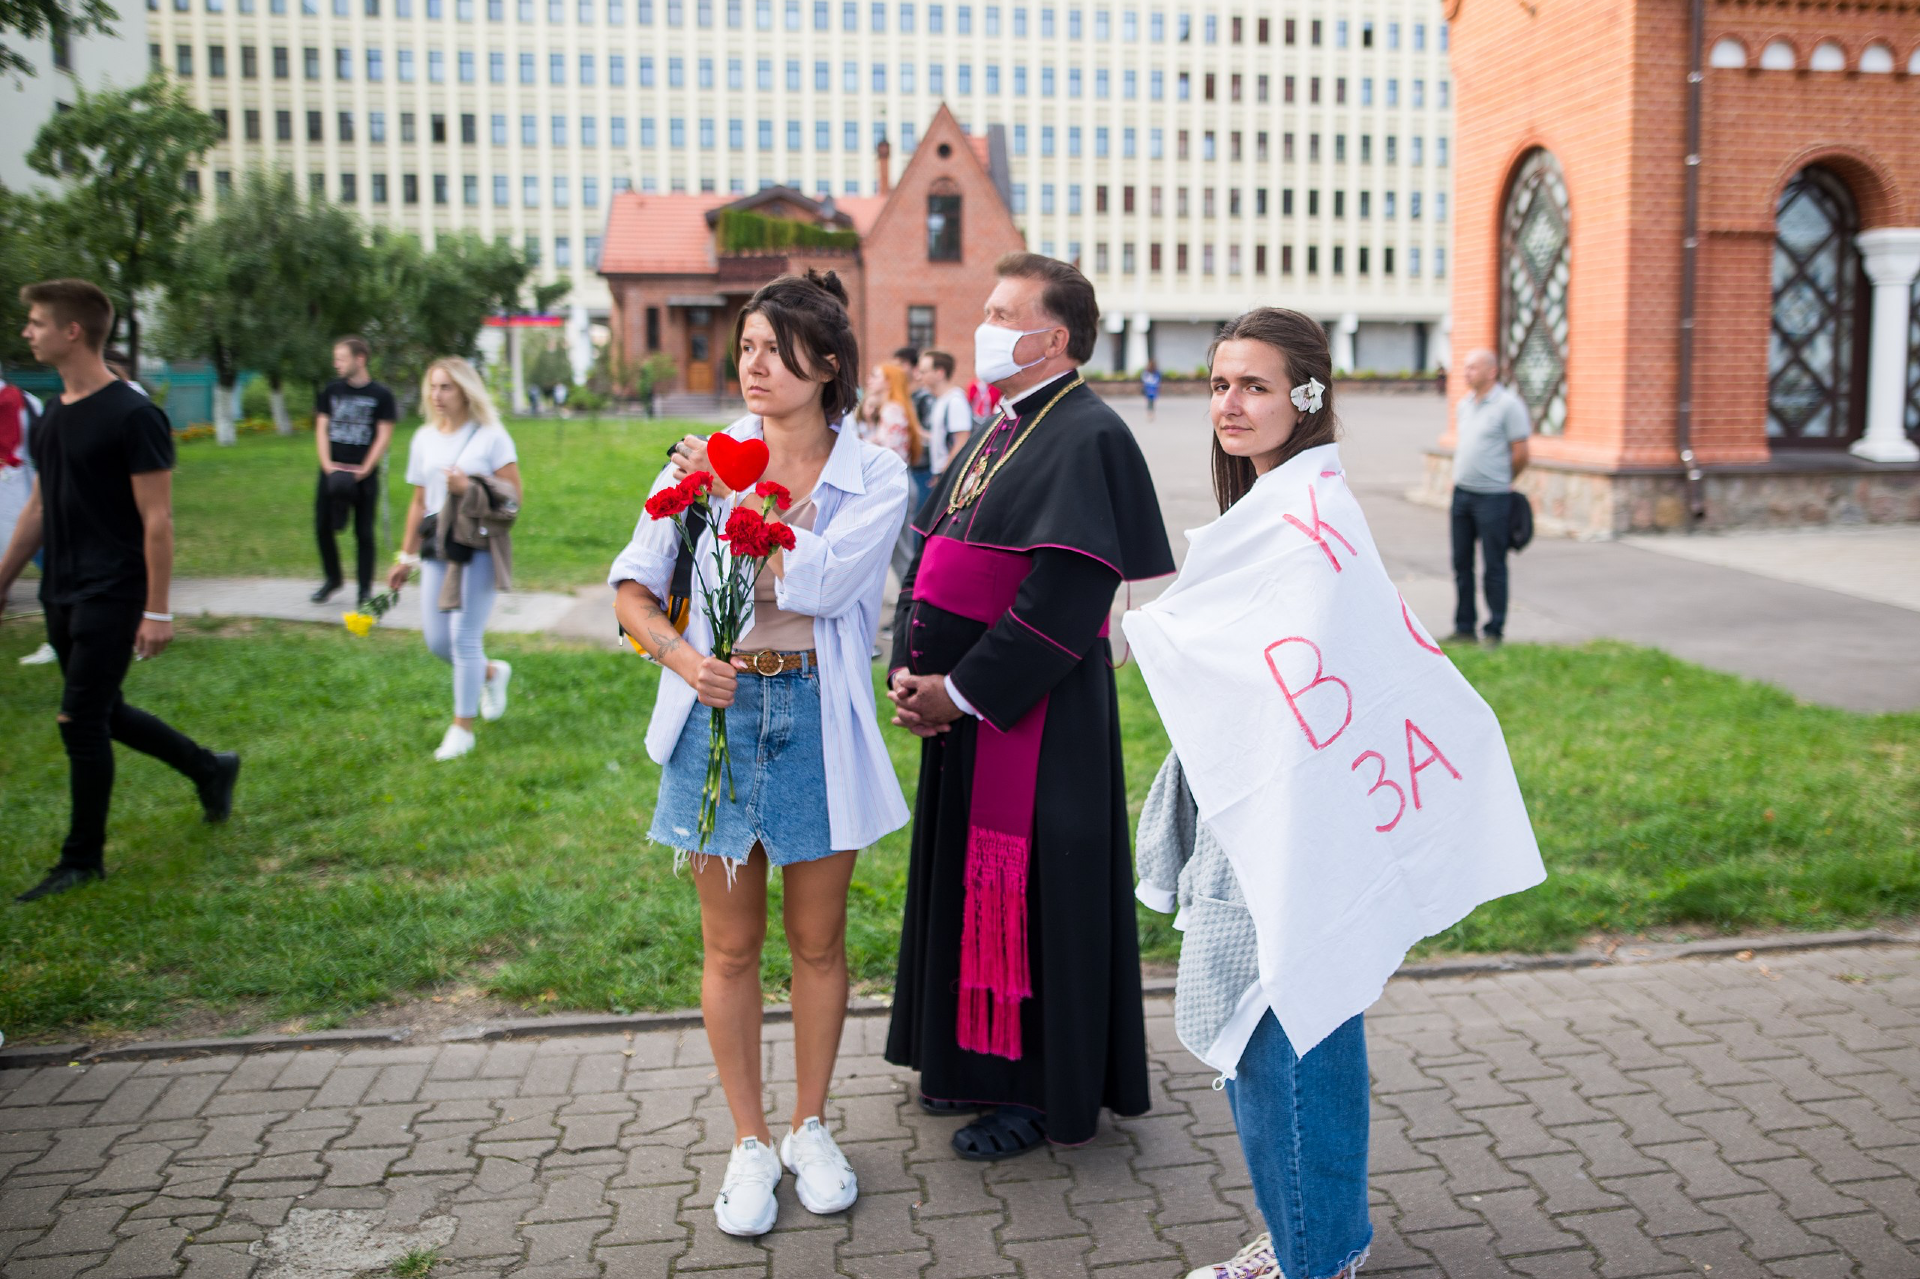 Women protest in Belarus